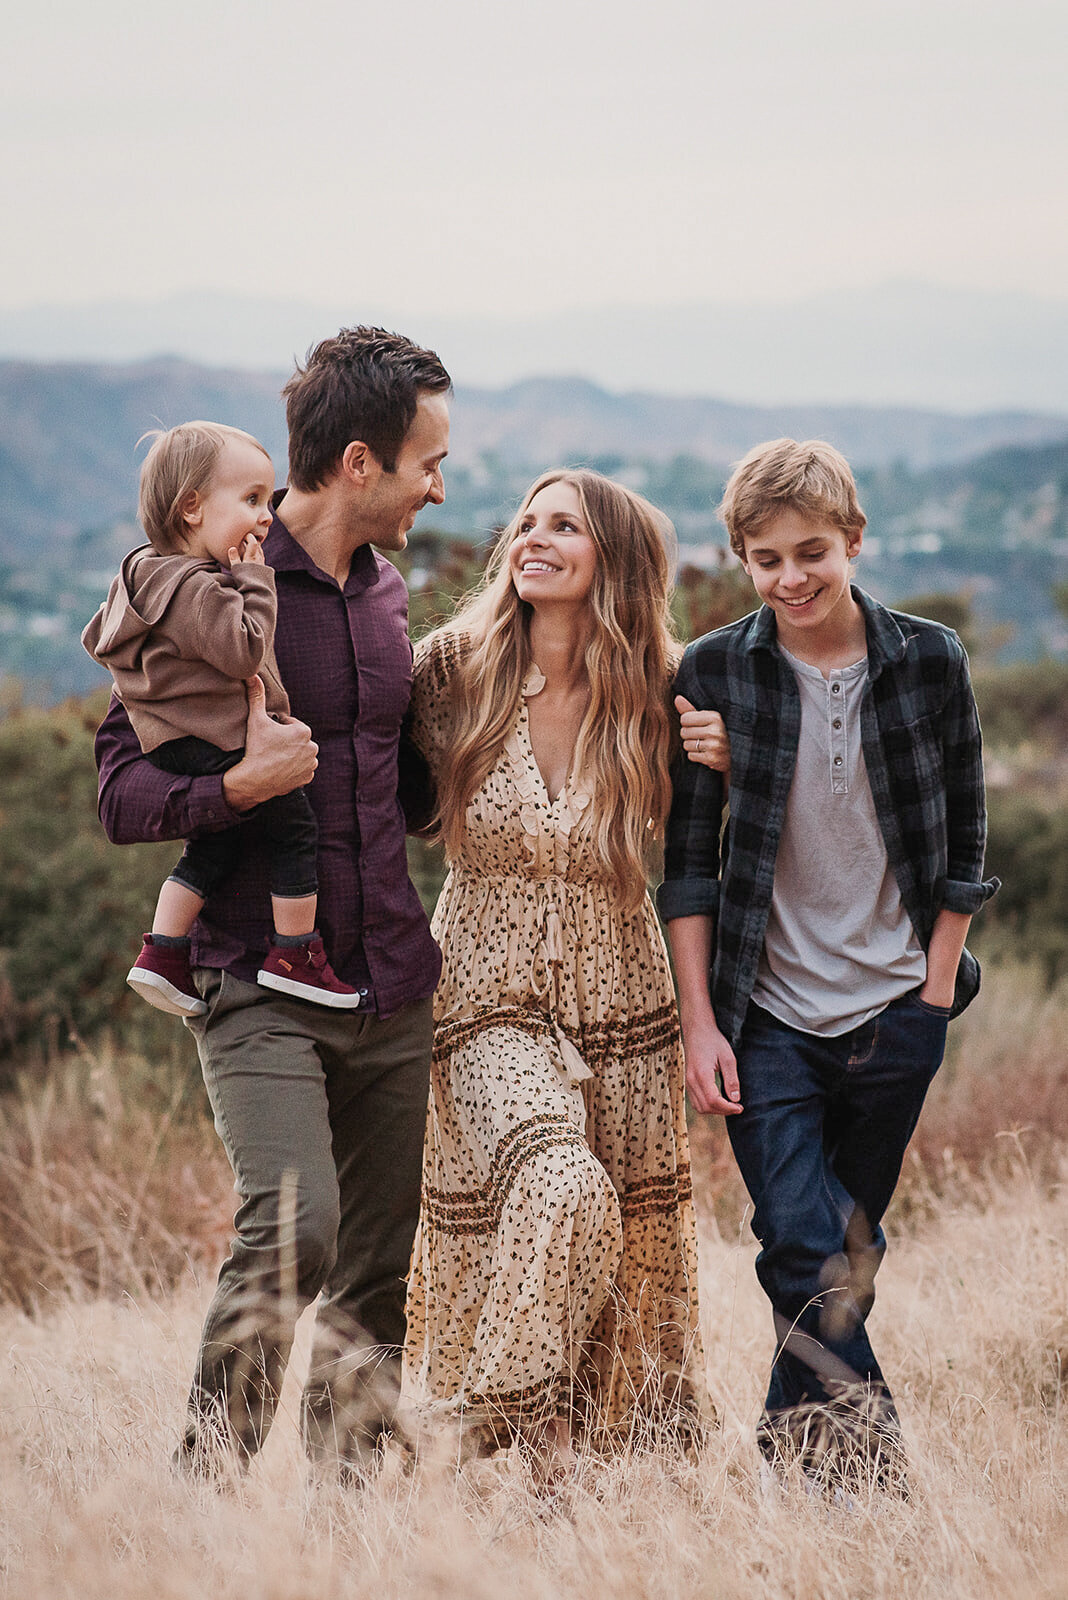 Pasadena family of four walks arm in arm on hillside